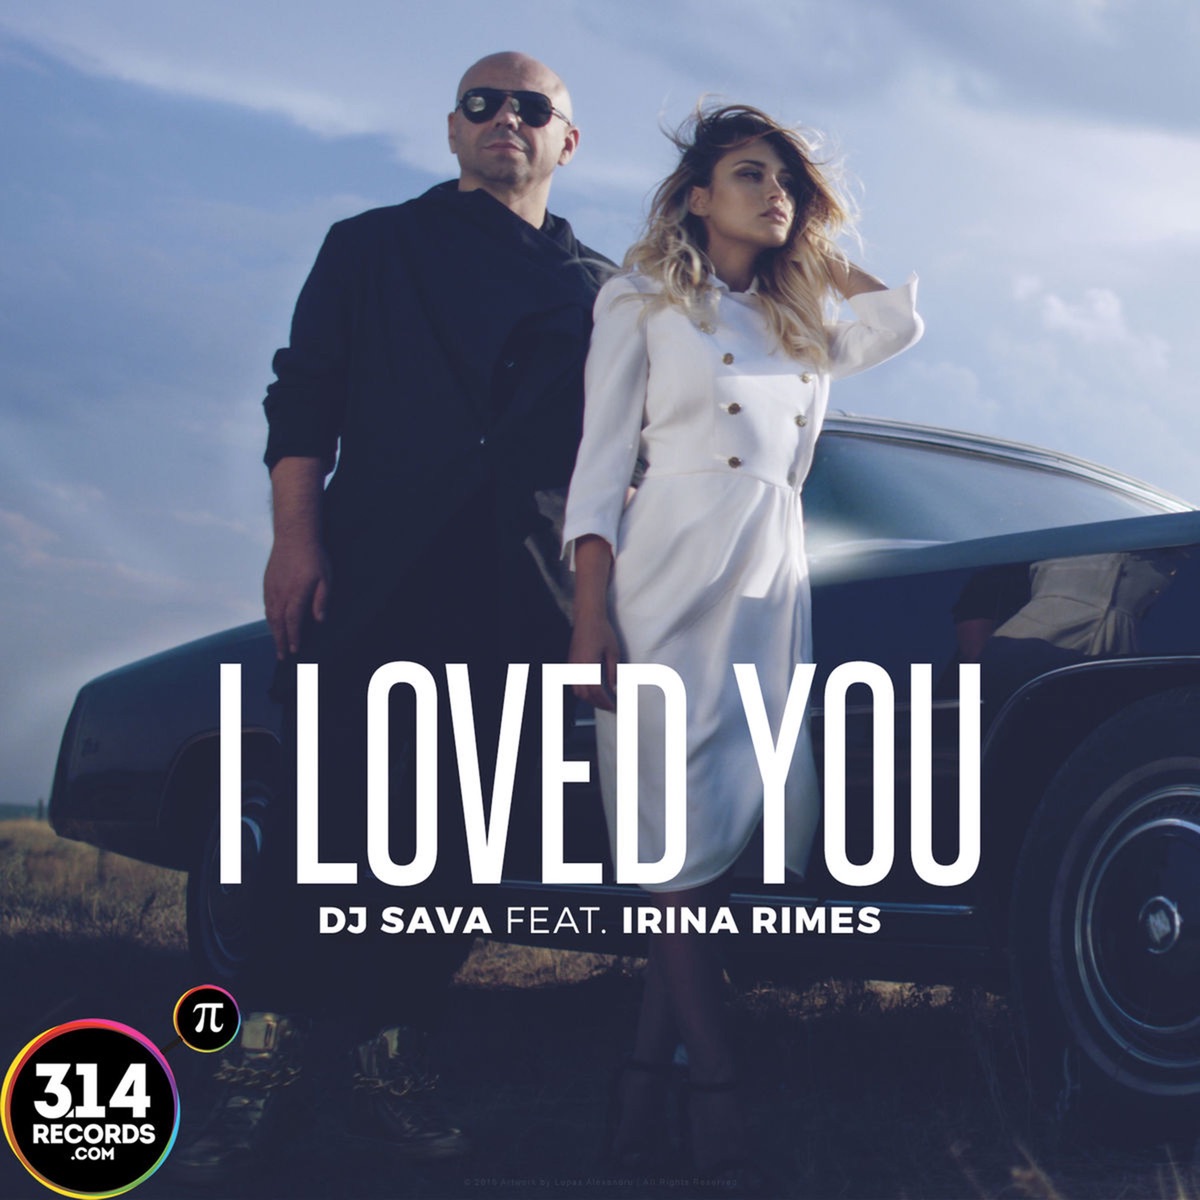 I Loved You (feat. Irina Rimes) - EP by Dj Sava on Apple Music